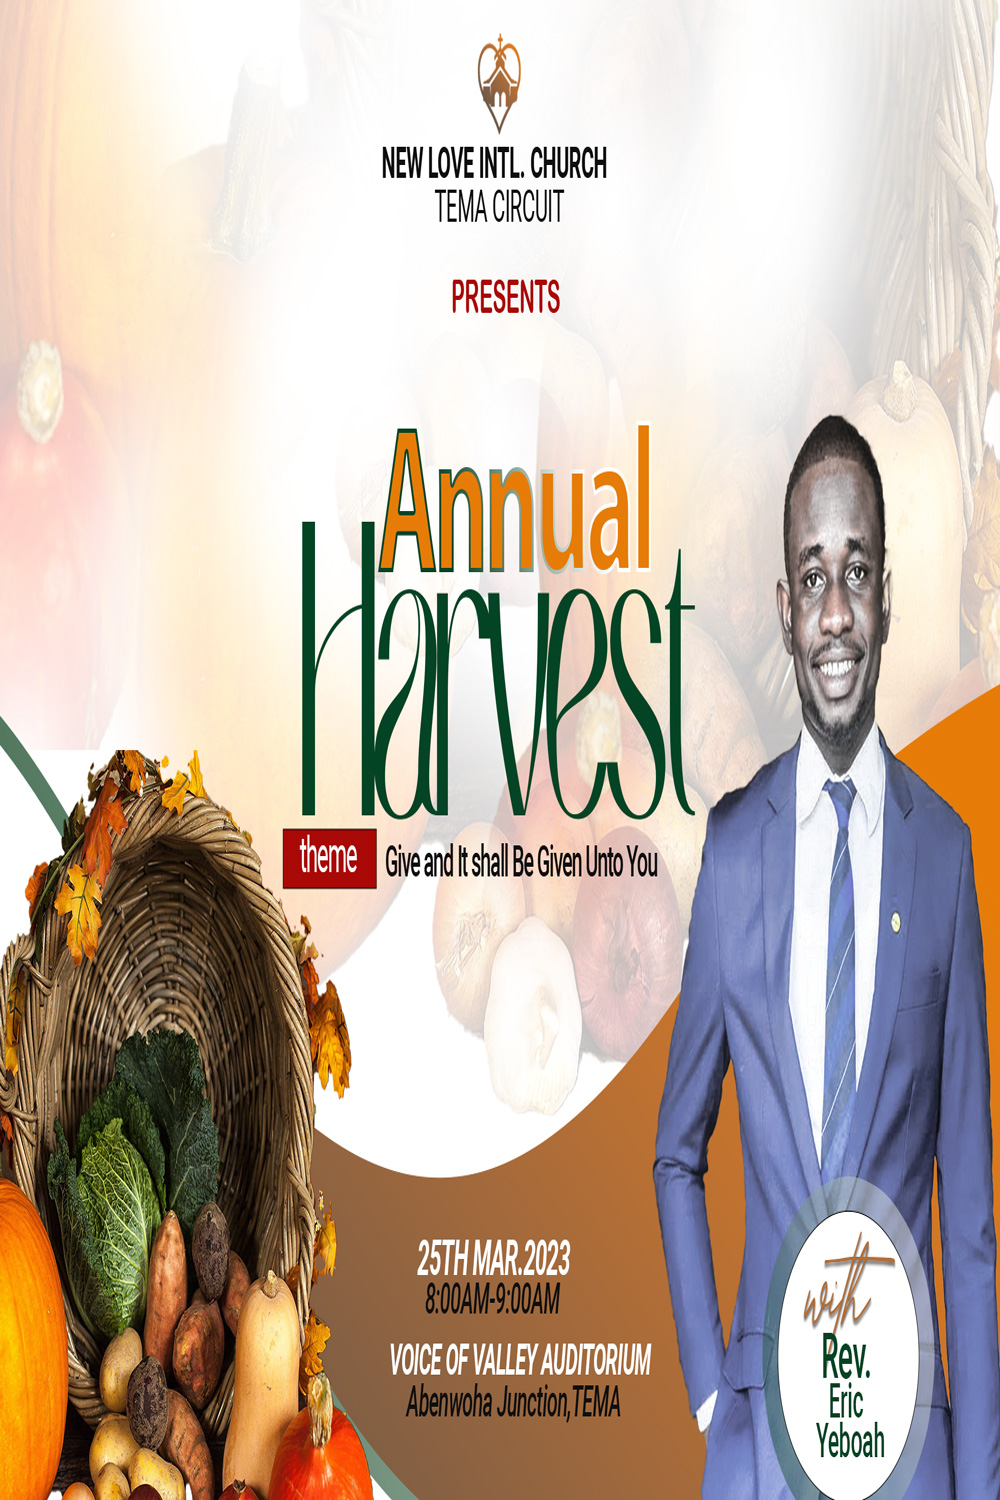 Annual Harvest Church Flyer Design pinterest image.